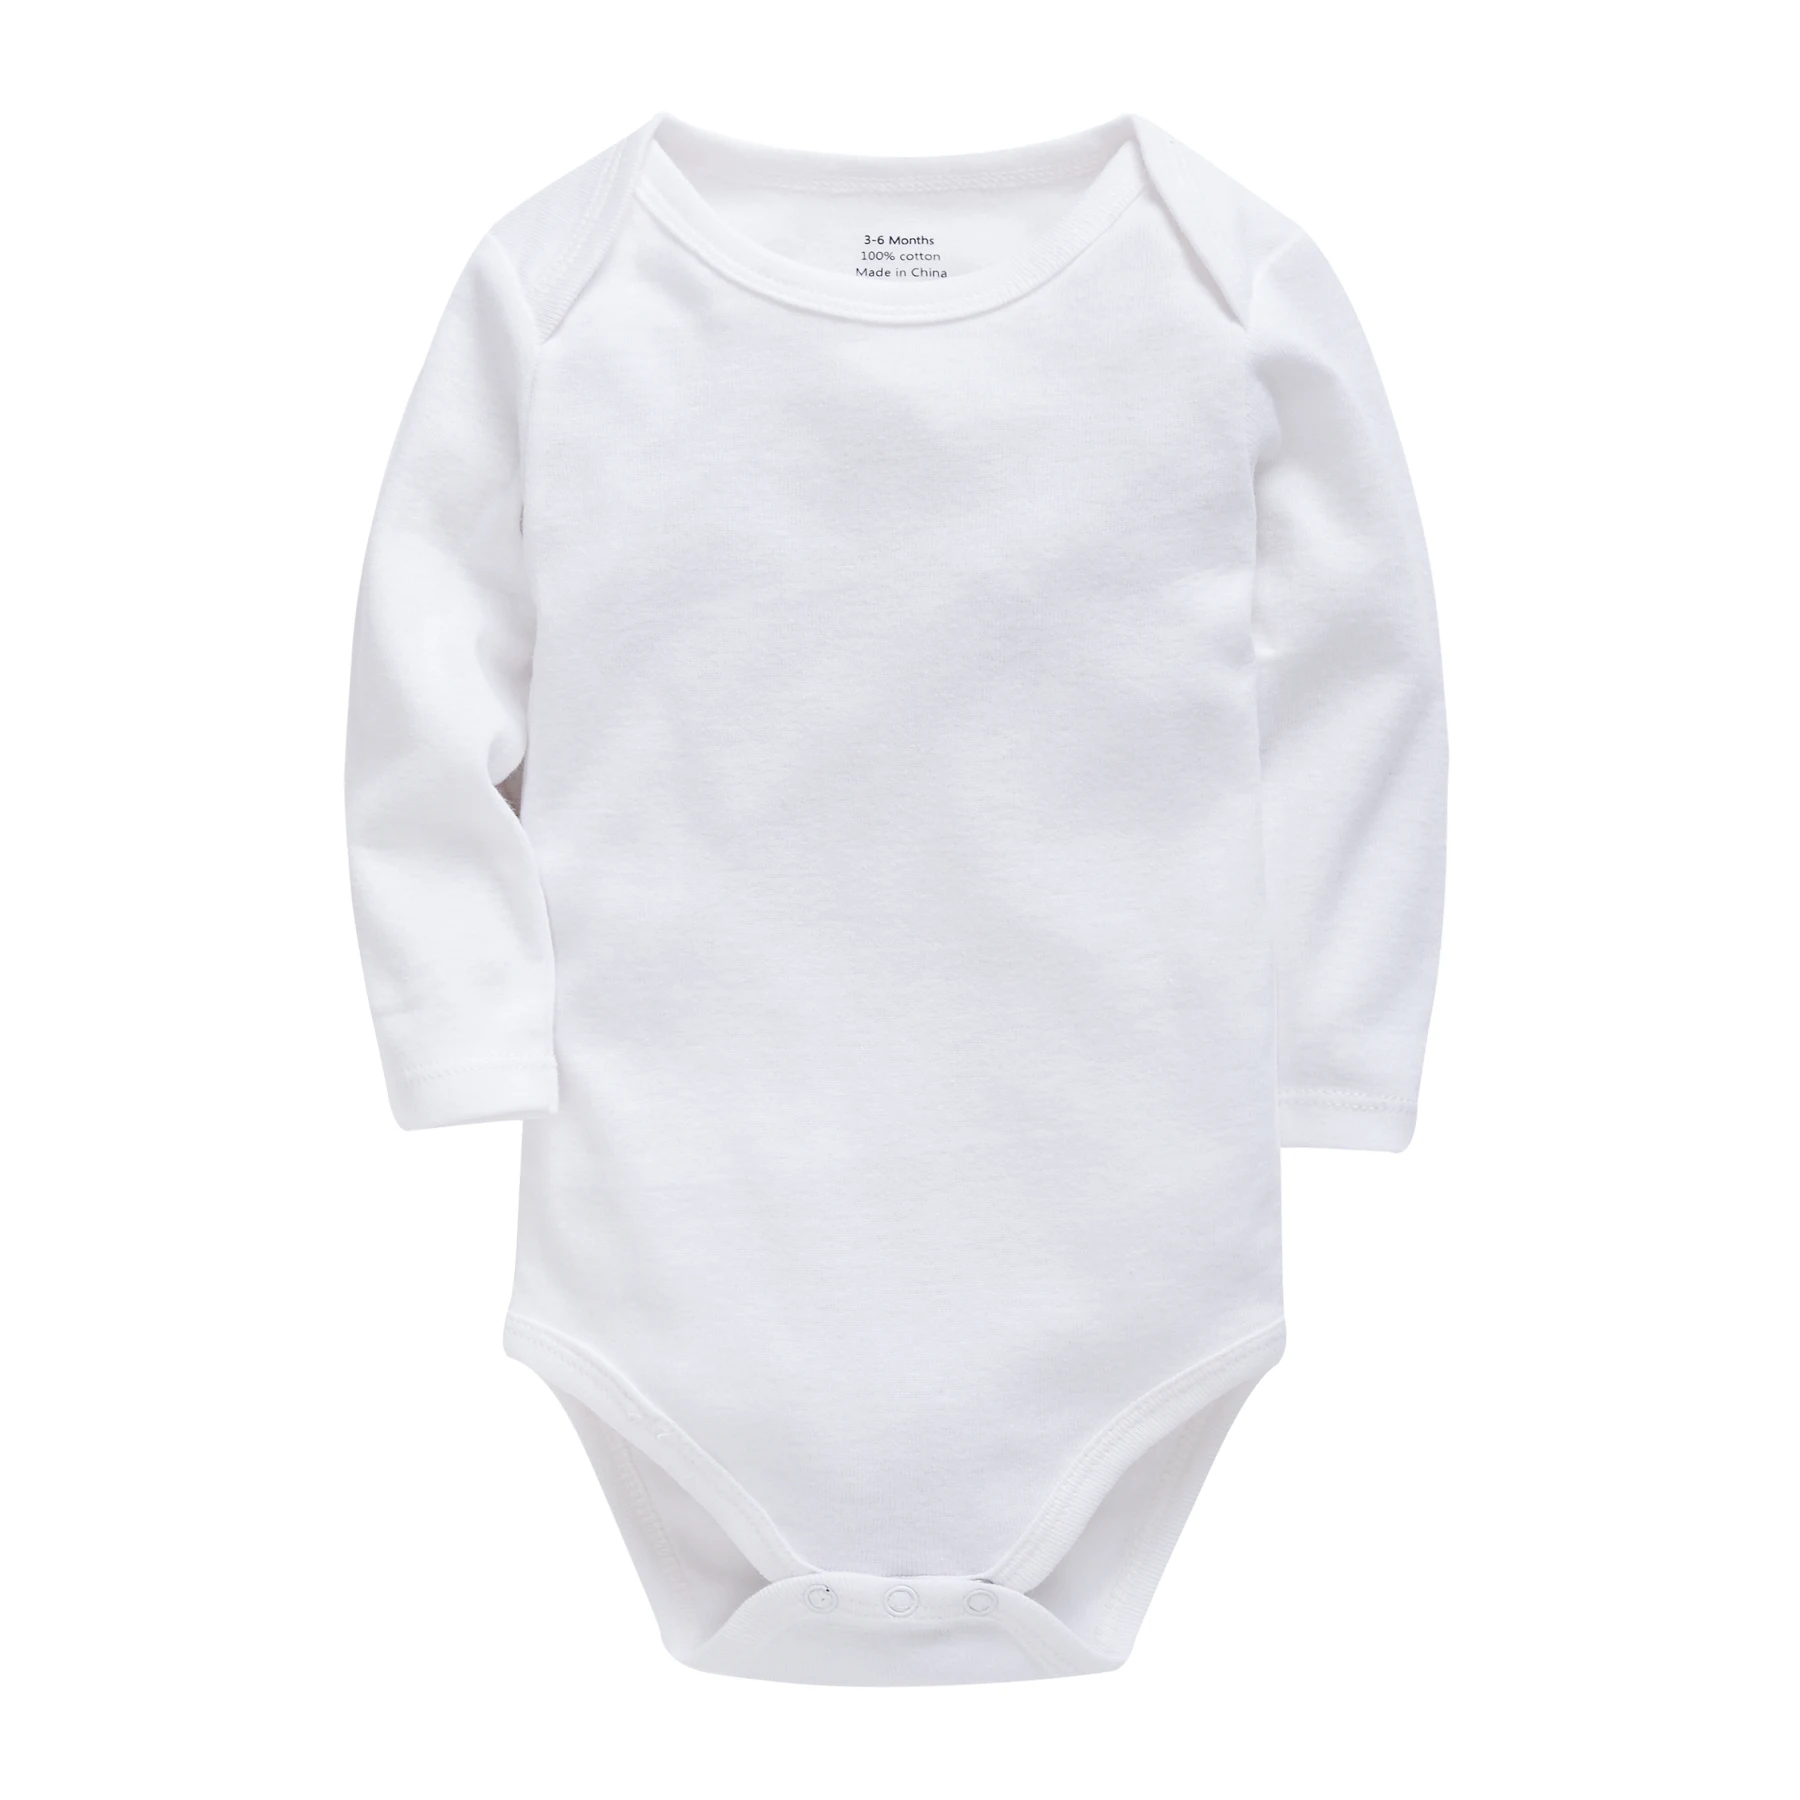 

Honeyzone New Born Baby Clothes Baby Girl Romper Infant Cotton Overalls Vetement Bebe Garcon Soft Tutine Neonato Jumpsuit